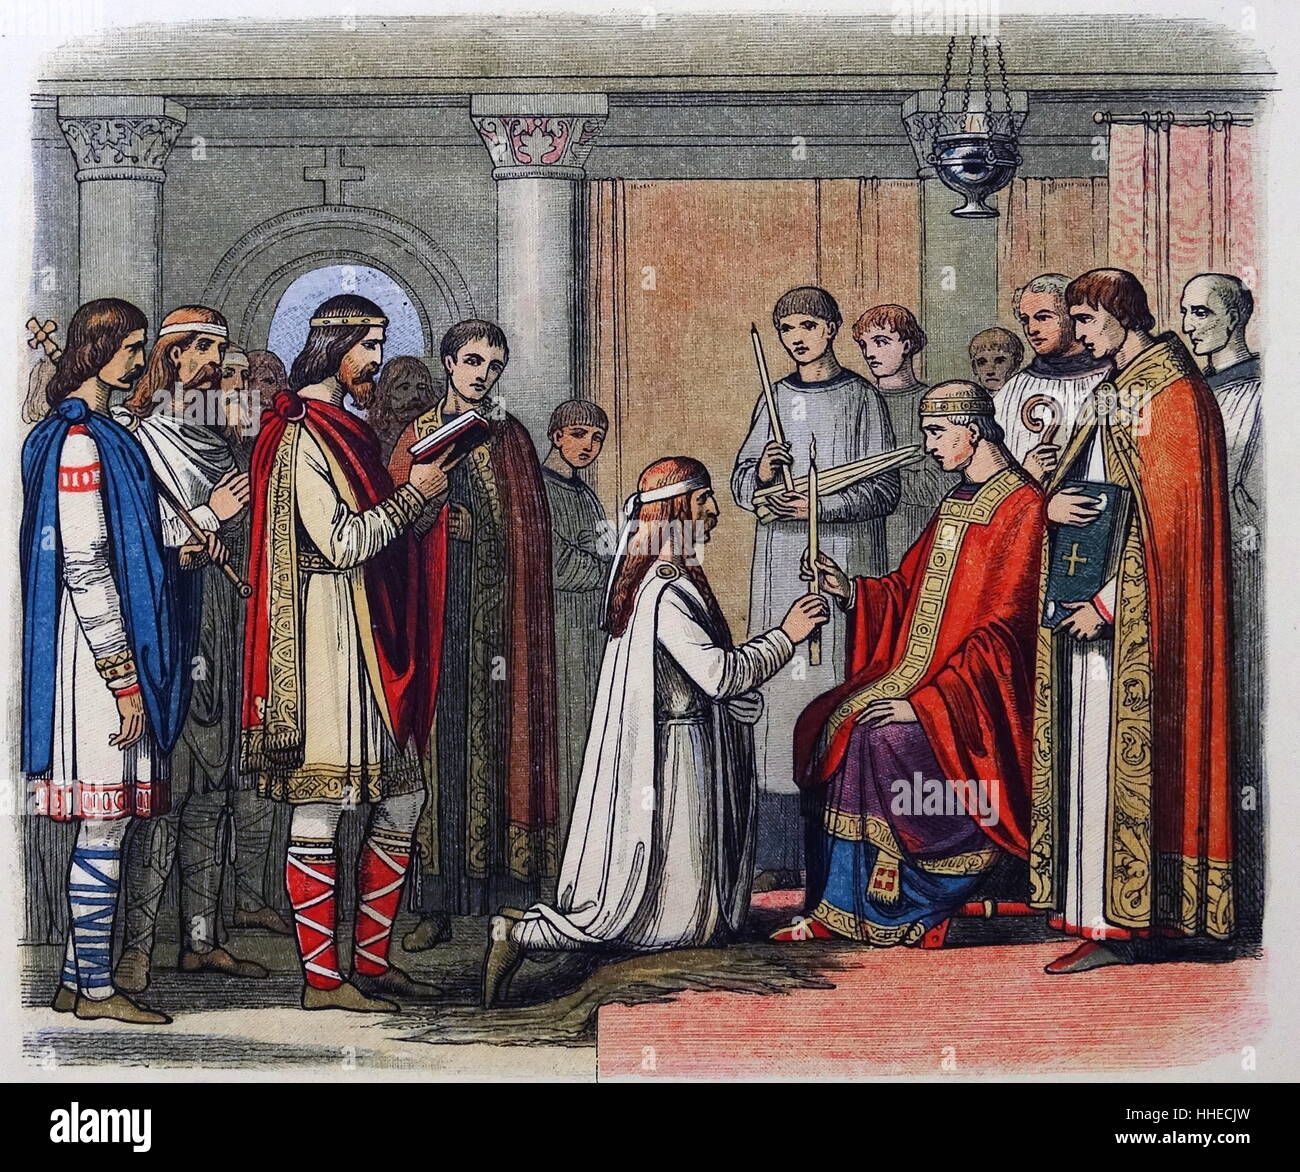 Baptism of King Guthorm. James E Doyle, A Chronicle of England BC 55 to AD 1485 (London, 1864). Stock Photo